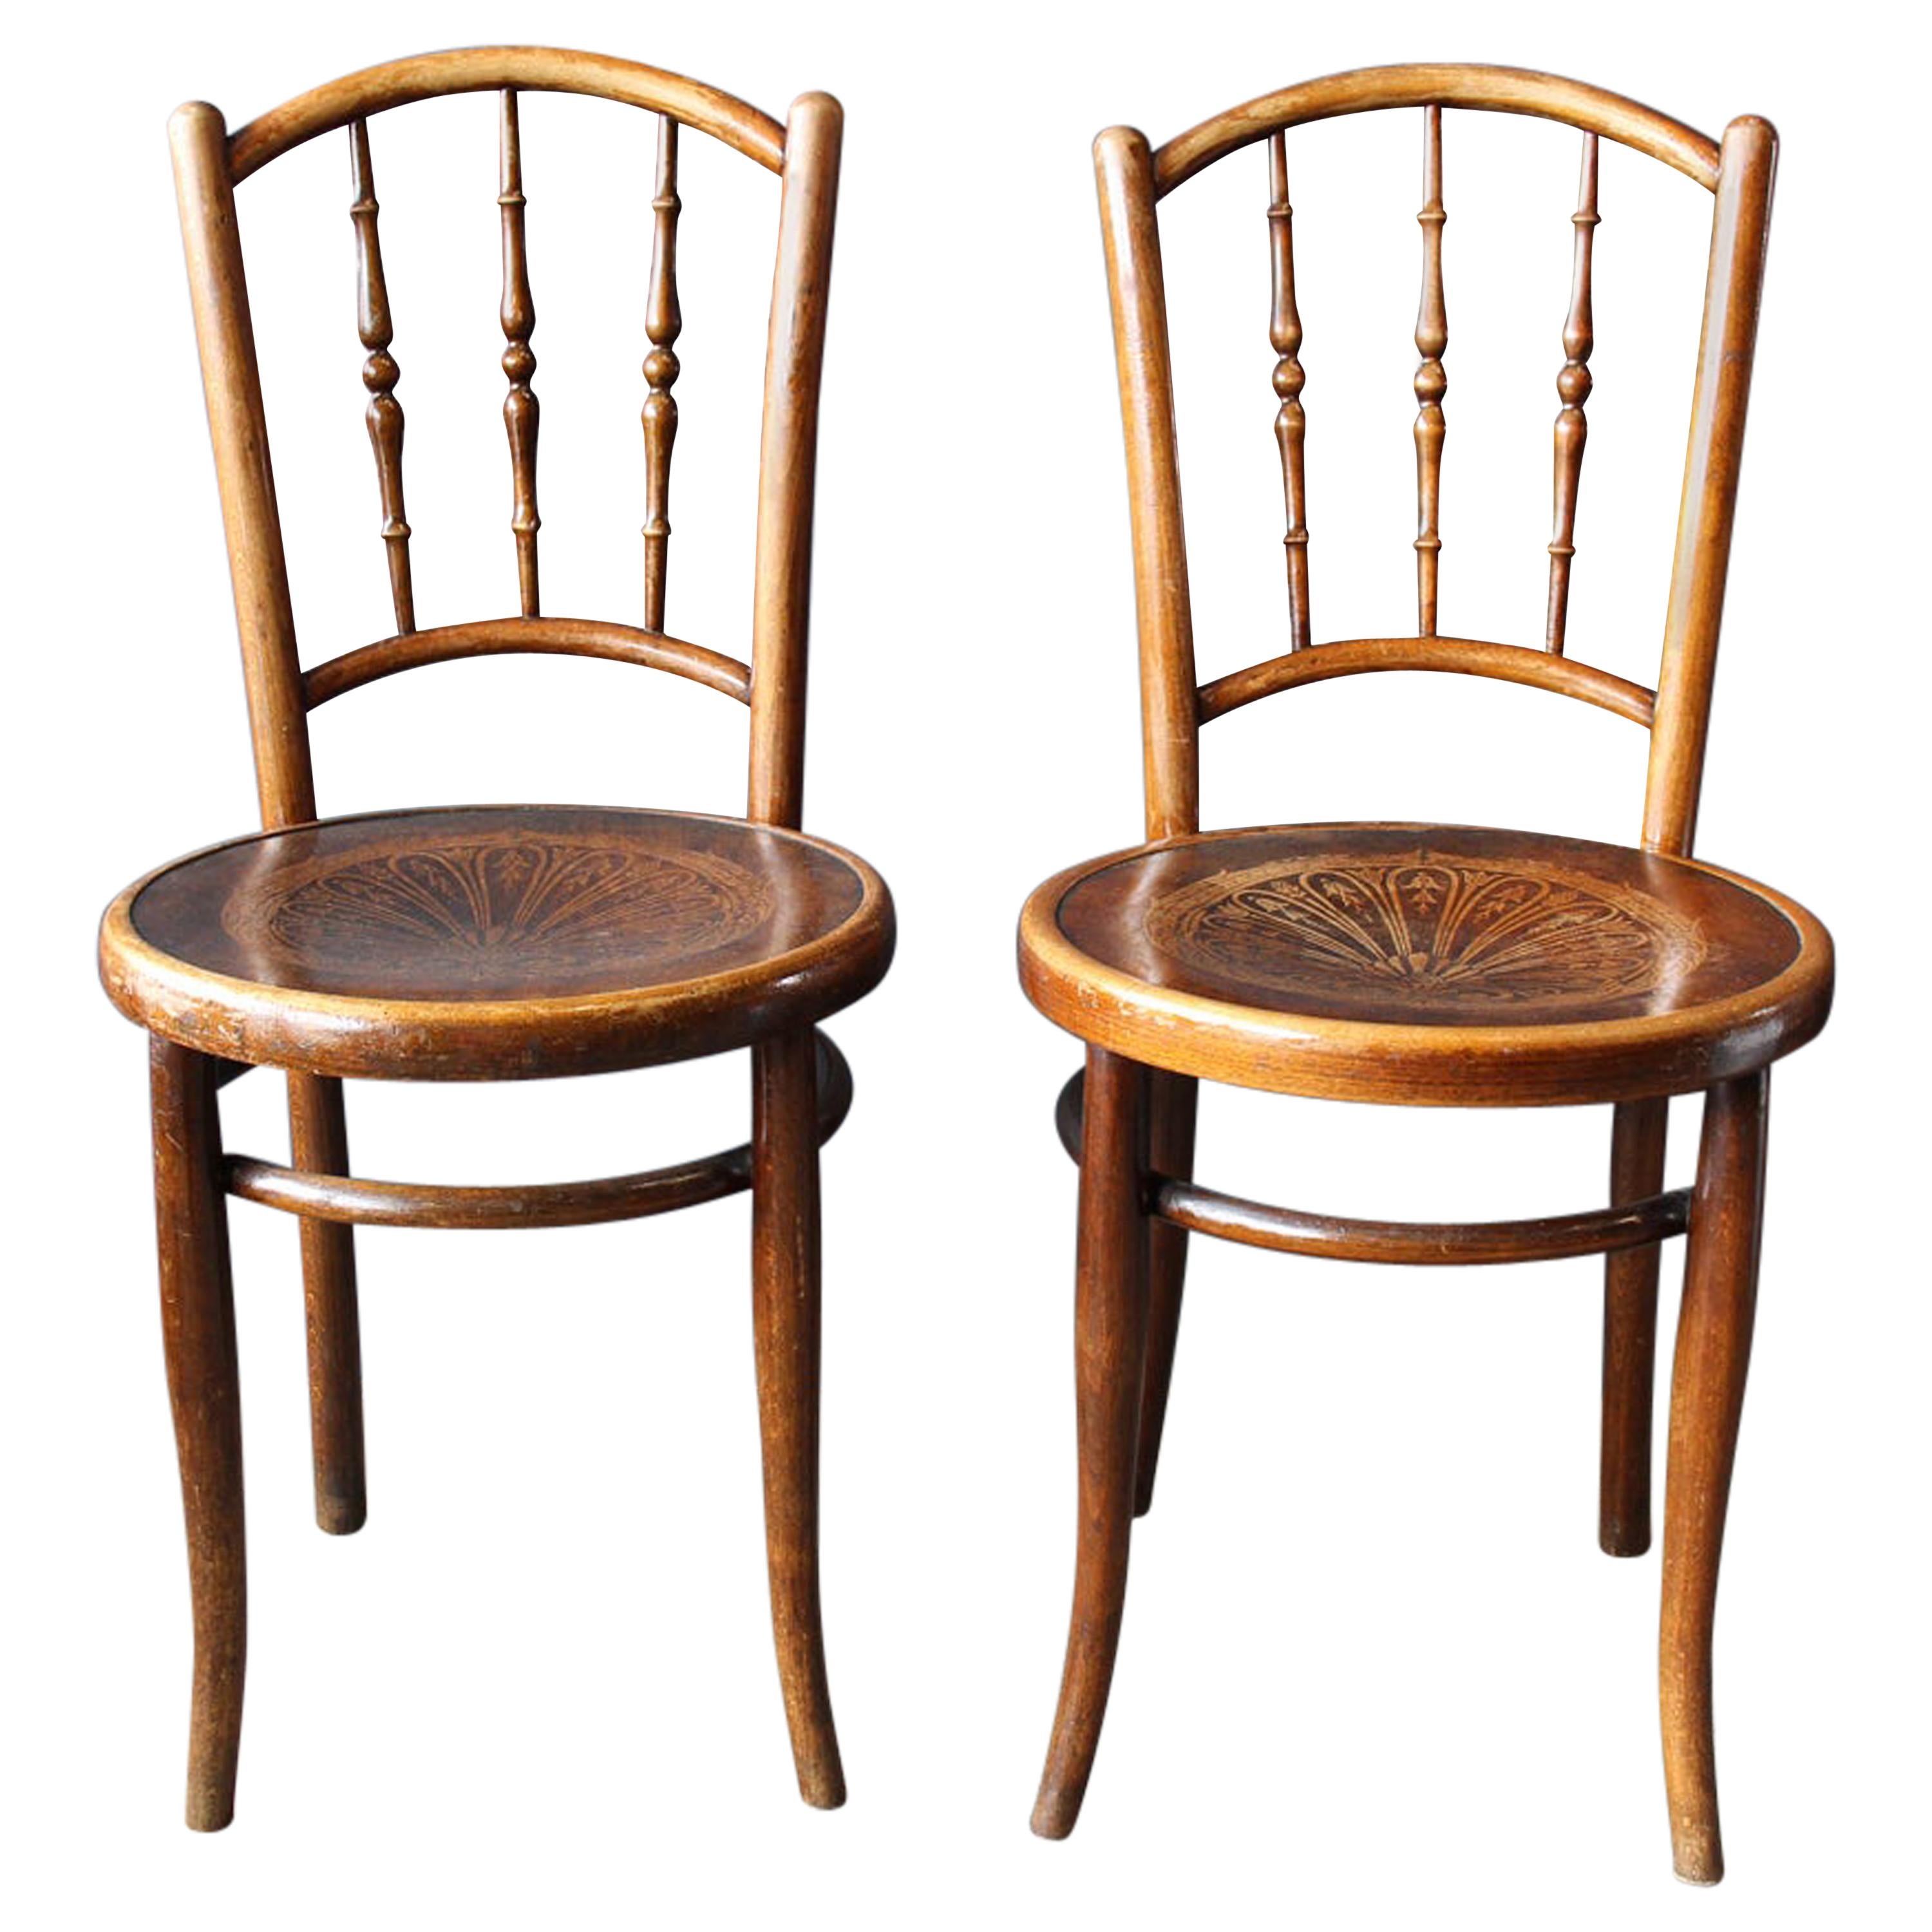 Bentwood Chair, Coffee House Chair, Jacob U. Josef Kohn Similar to Thonet